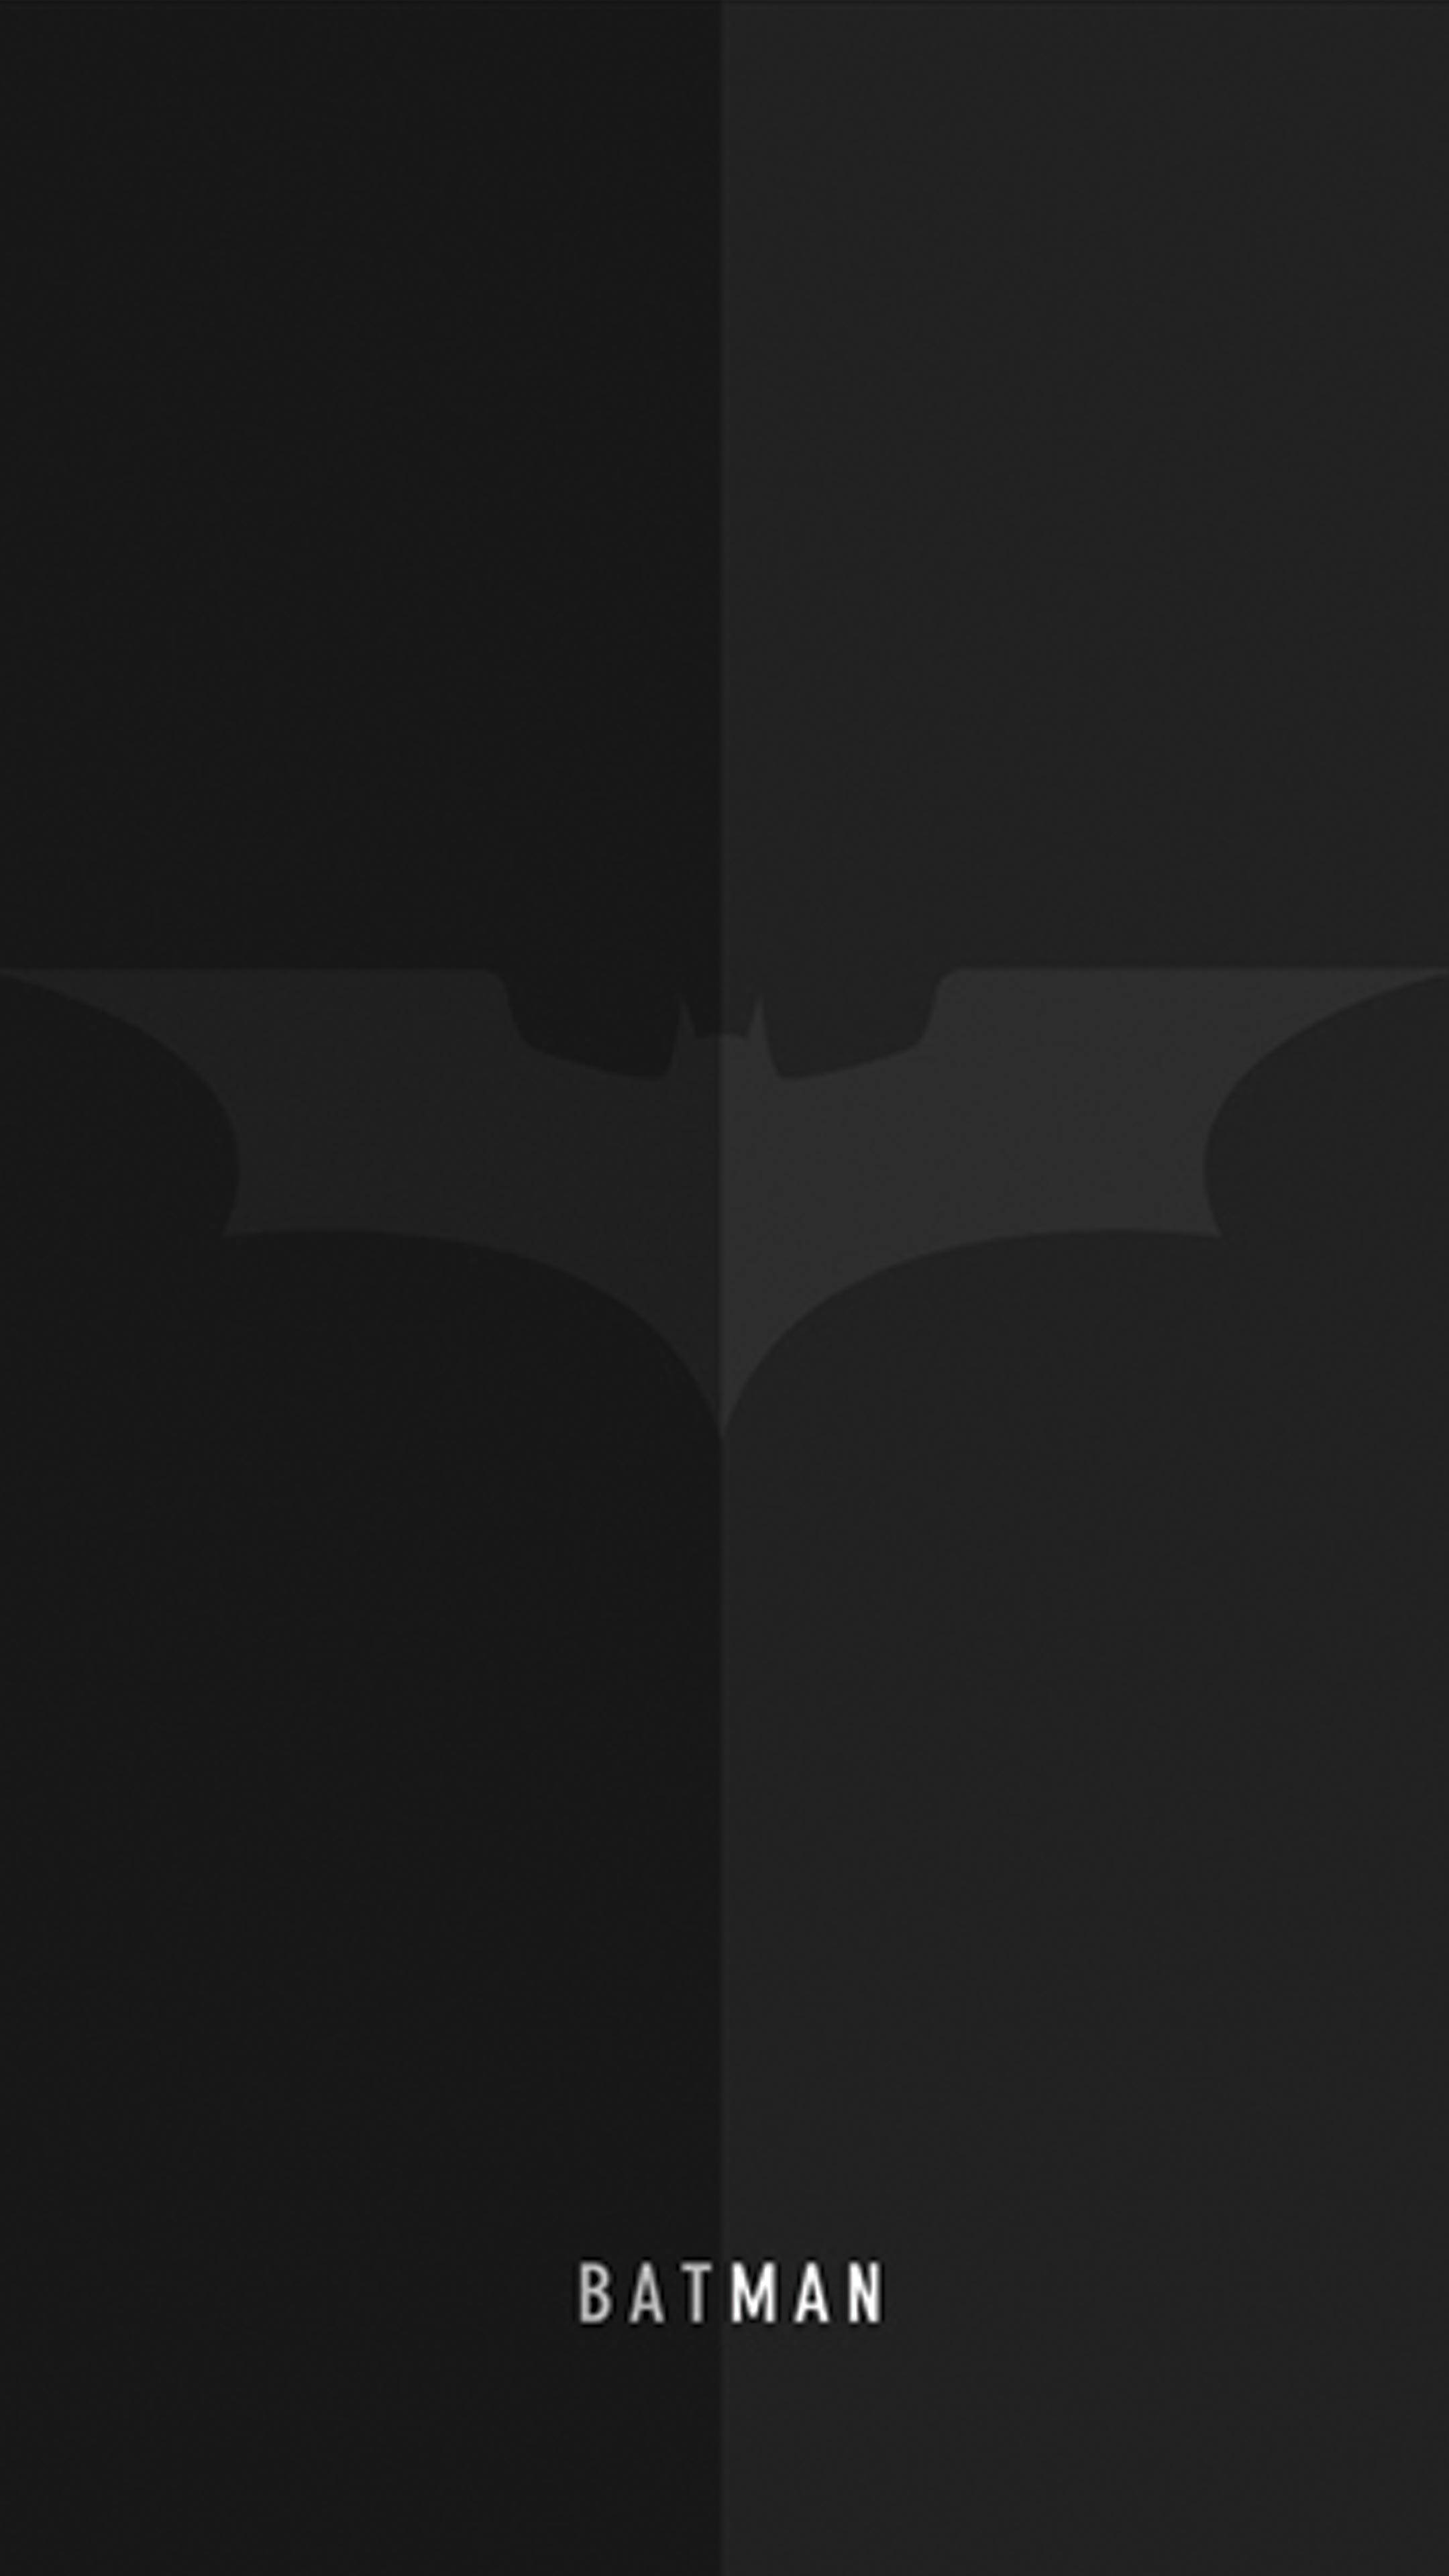 Download Minimalist Batman Logo Phone Wallpaper 